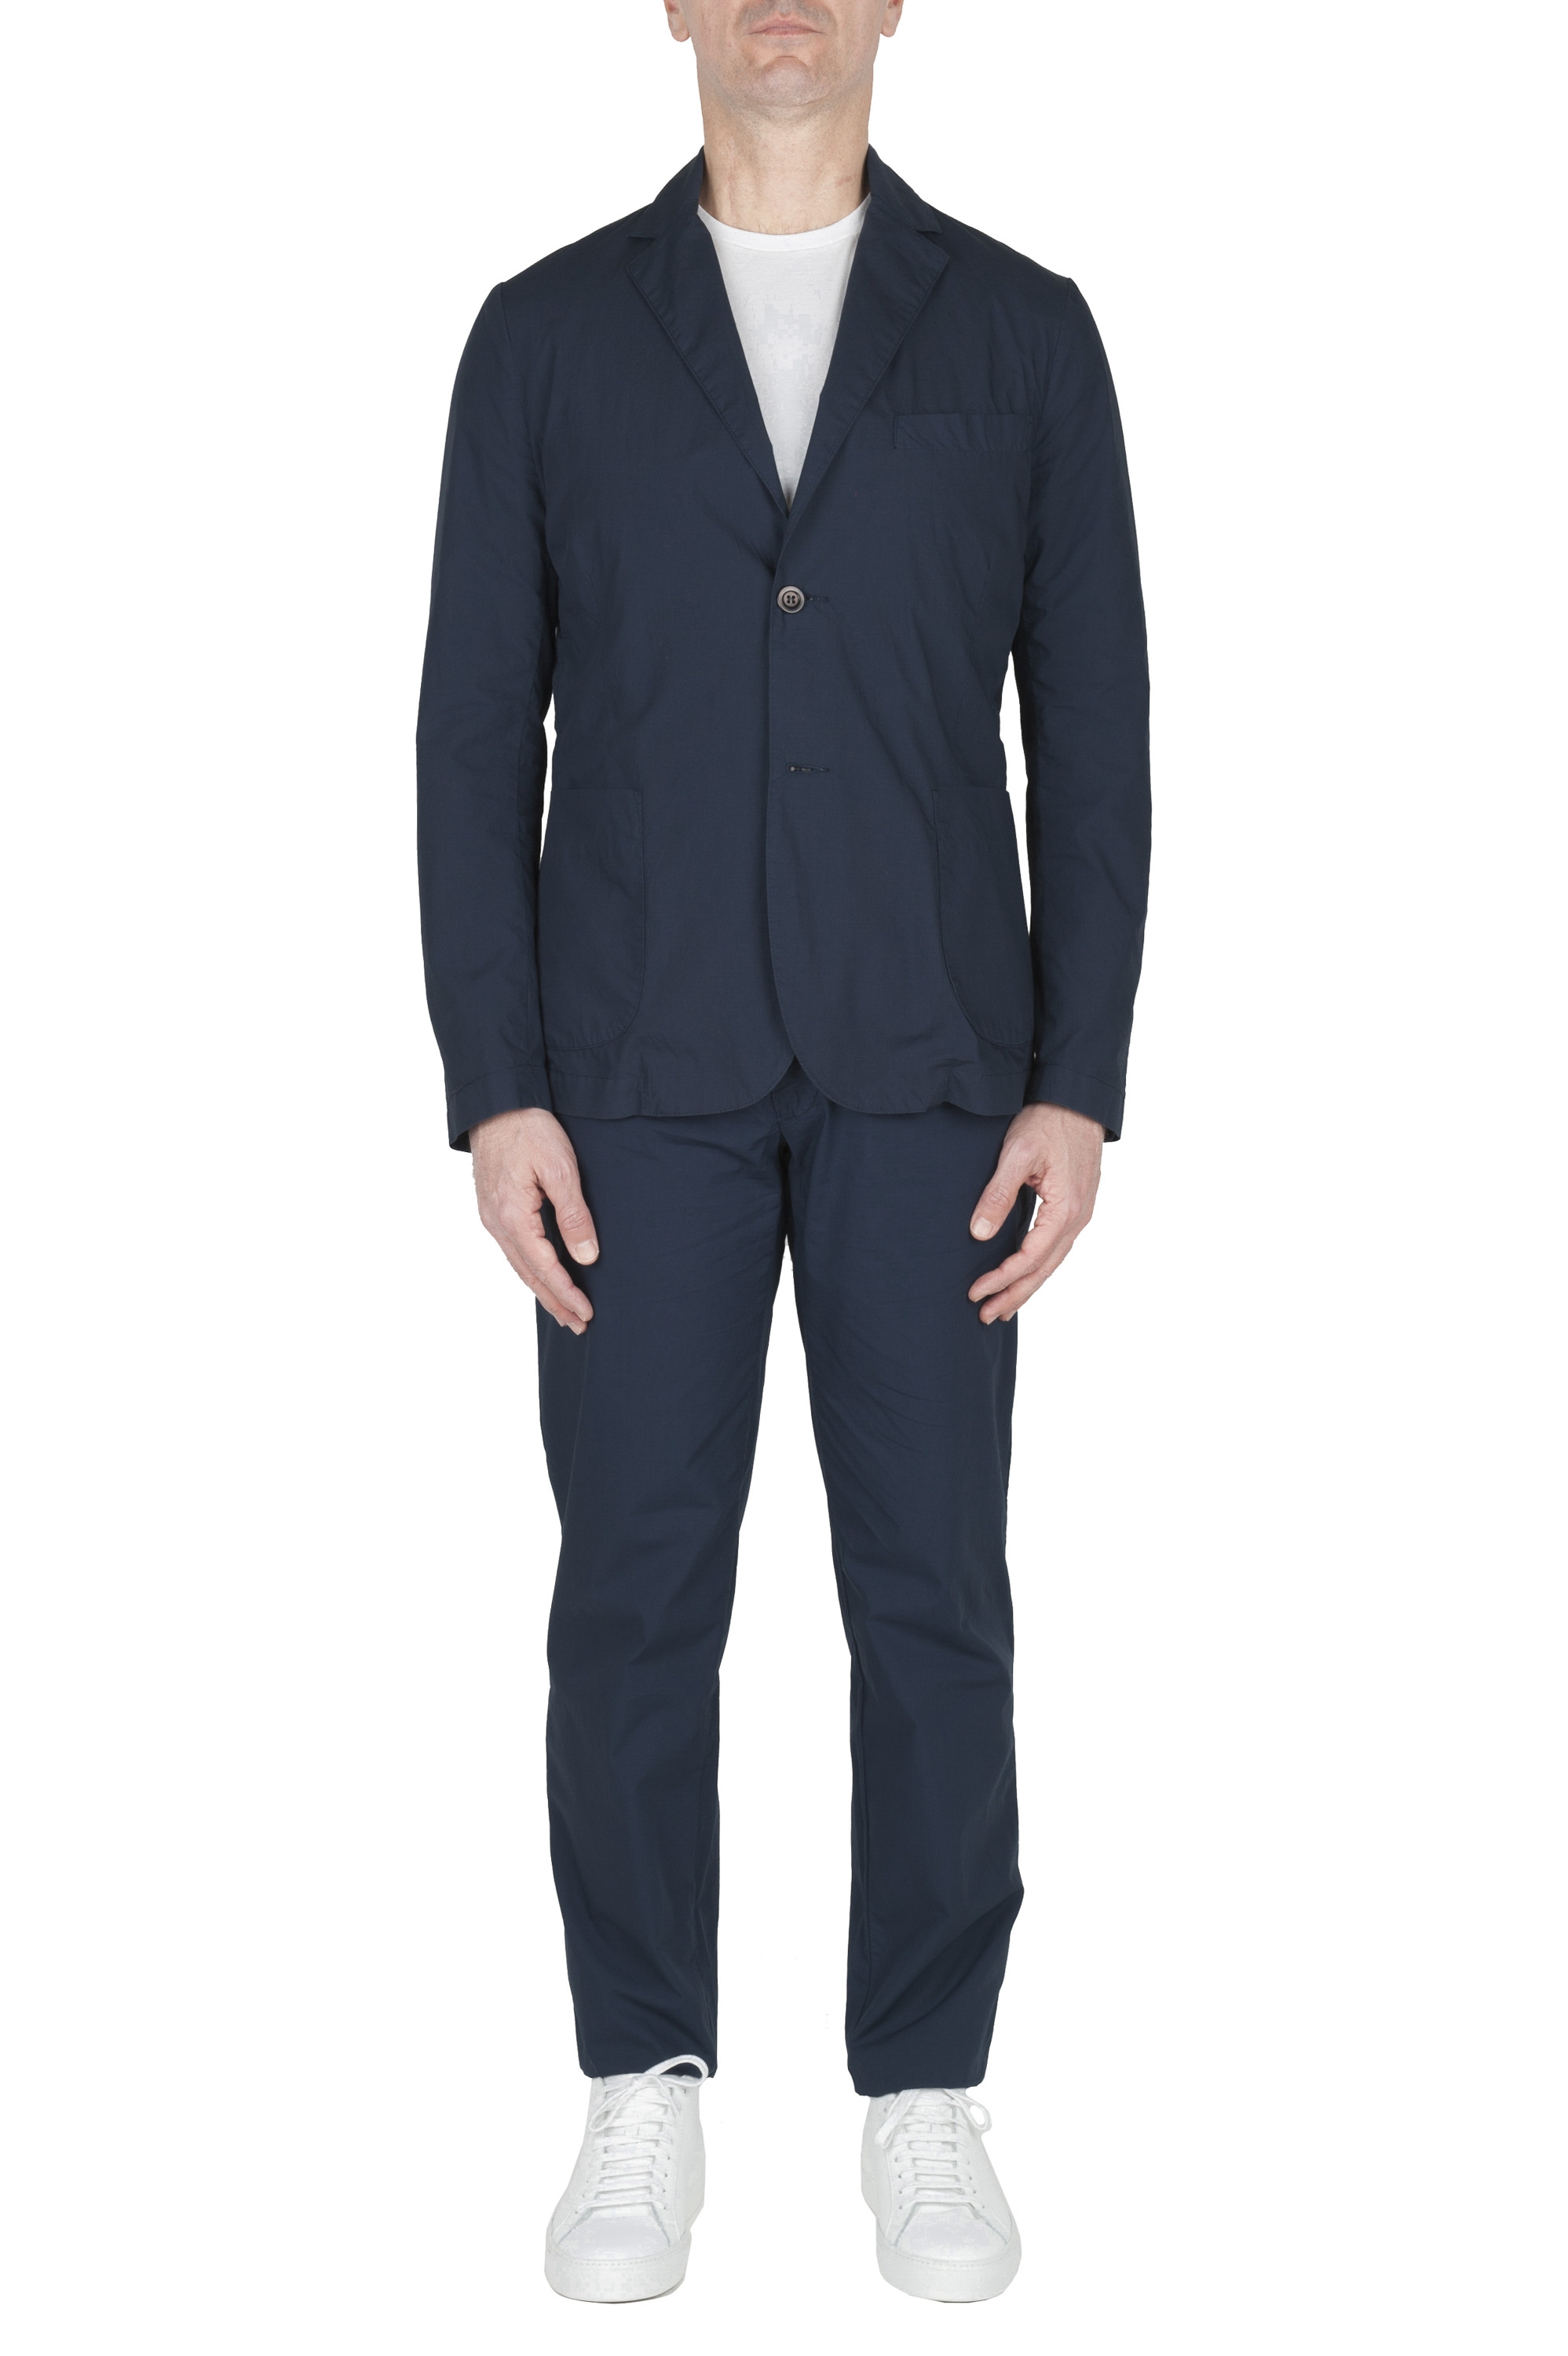 SBU 03056_2020AW Navy blue cotton sport suit blazer and trouser 01